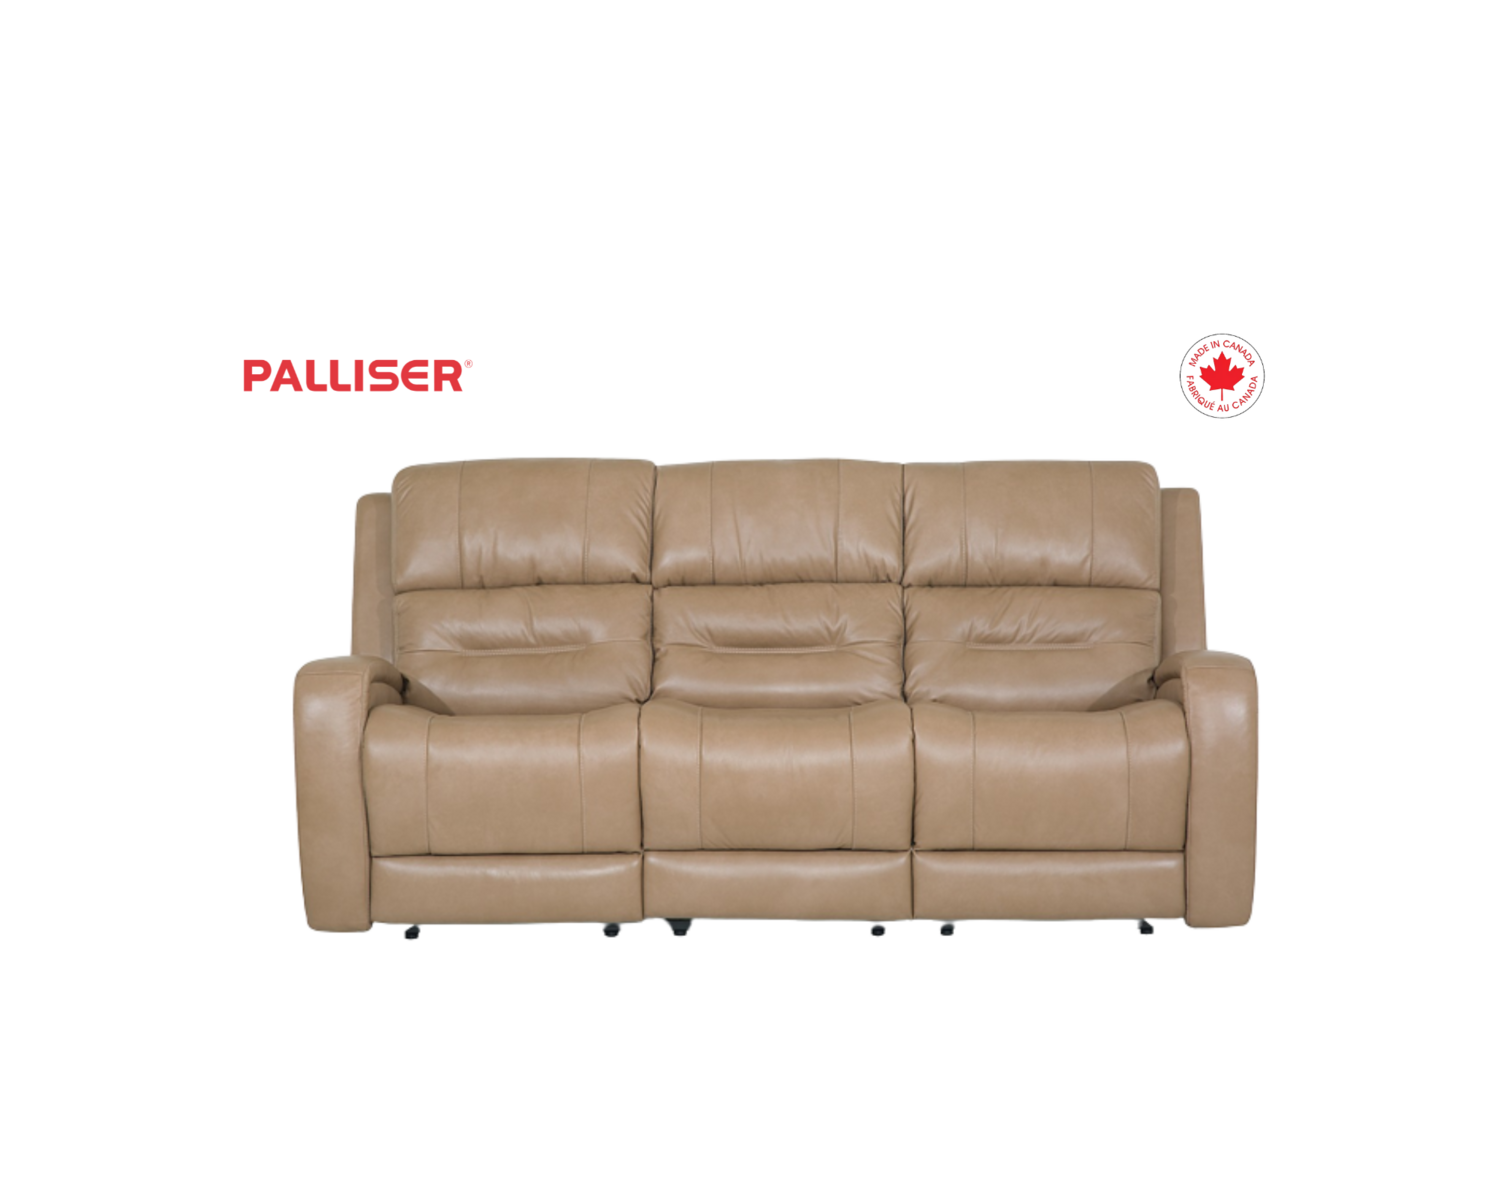 Palliser - Sofa Washington en tissu commercial